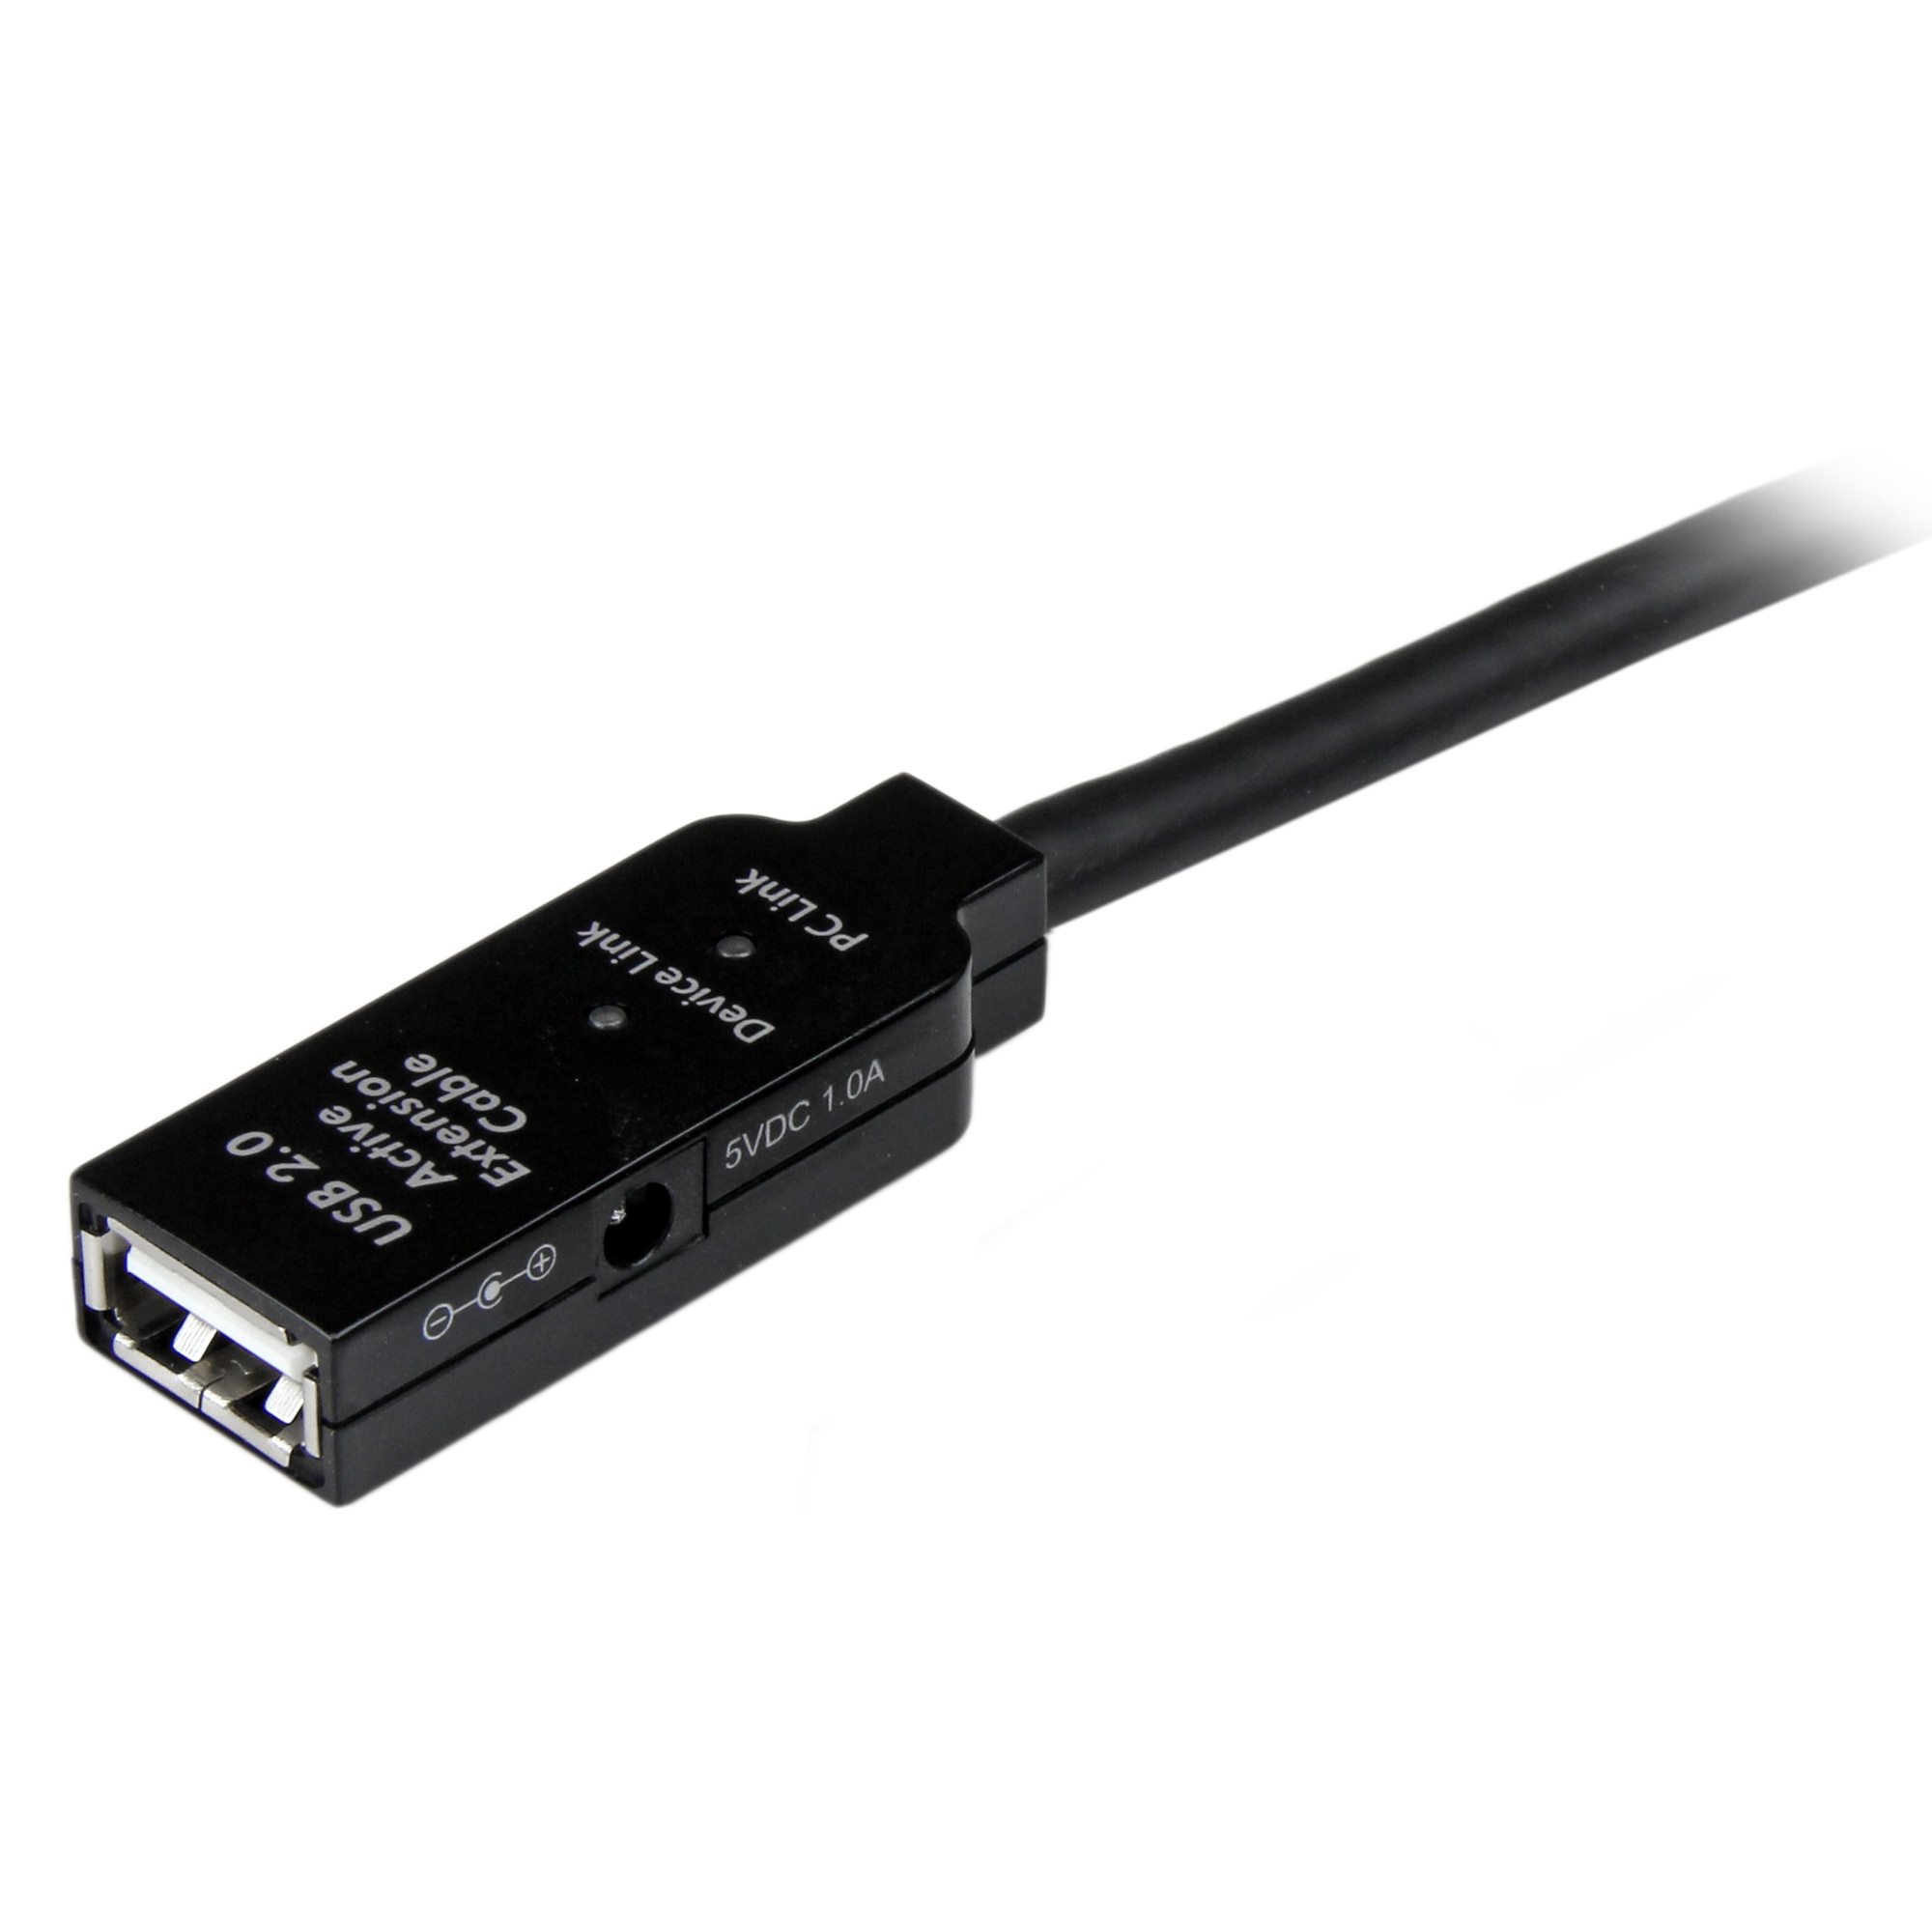 USB 2.0 25ft A-A Extension Cable M/F Translucent PCABUSBX0058 